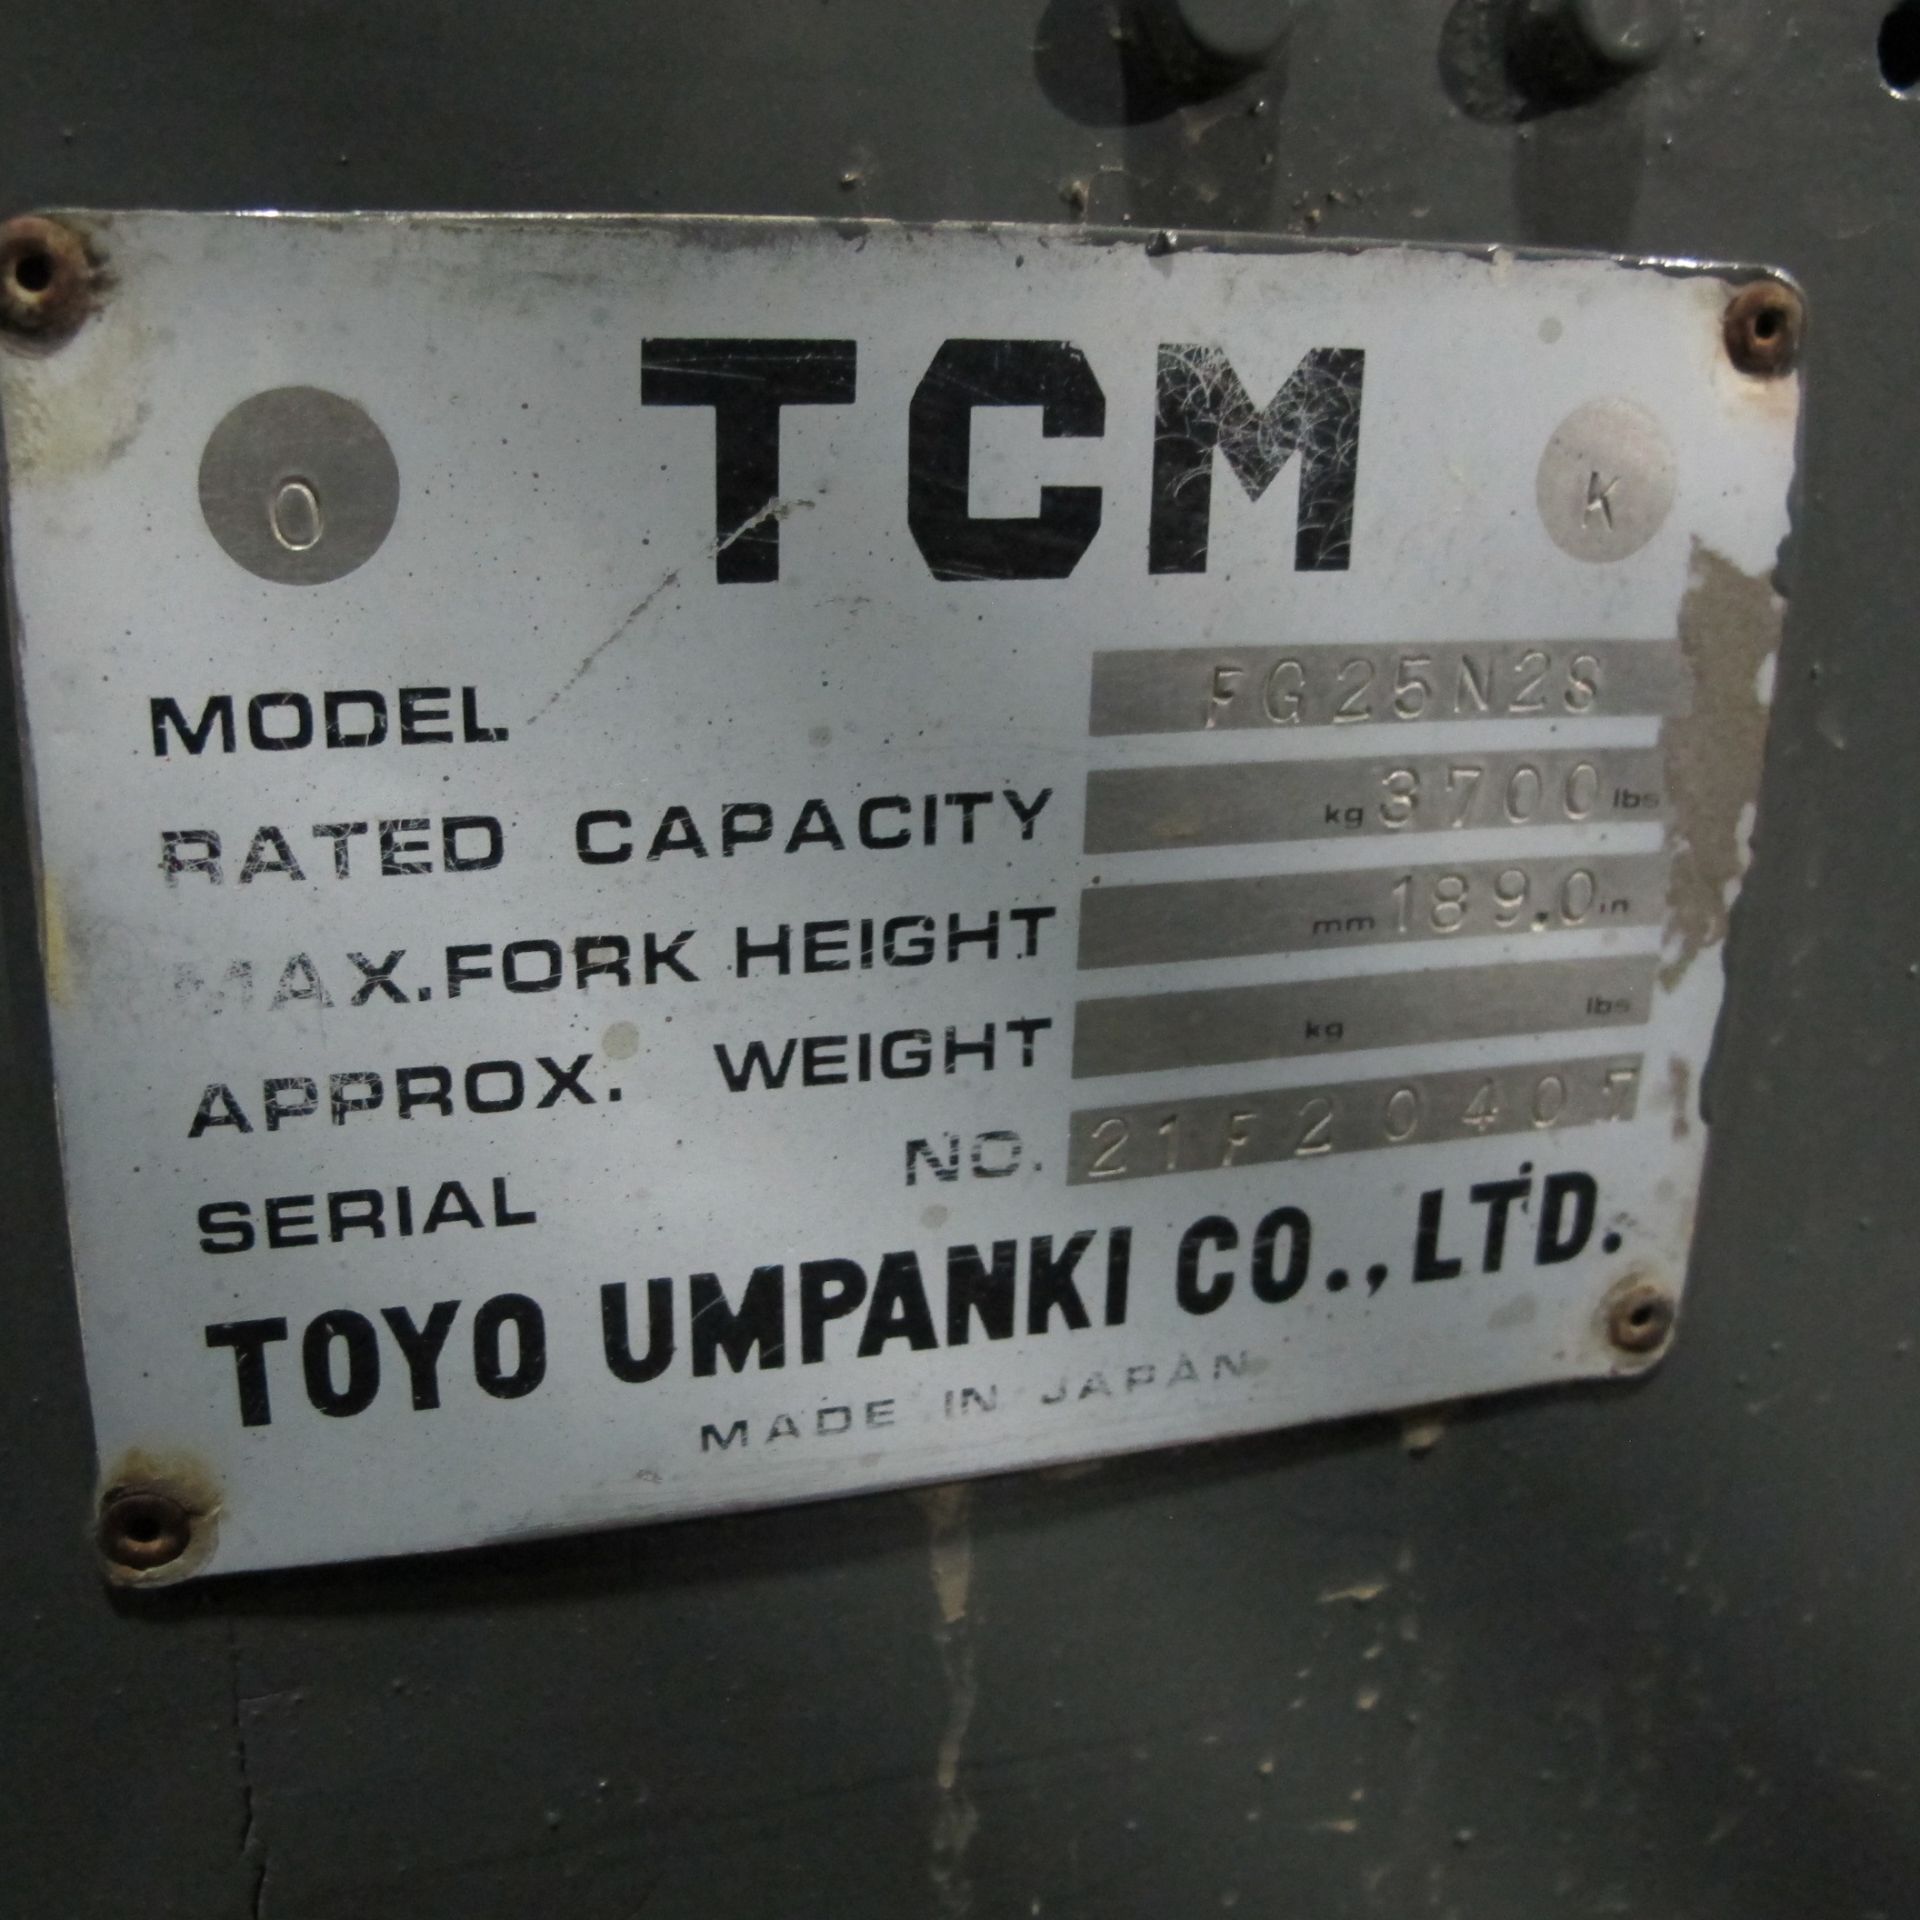 TCM FG25 PROPANE FORKLIFT, 3,700LB CAP., 189" MAX LIFT, 3-STAGE MAST, PNEUMATIC TIRES, OUTDOOR LIFT, - Bild 7 aus 10